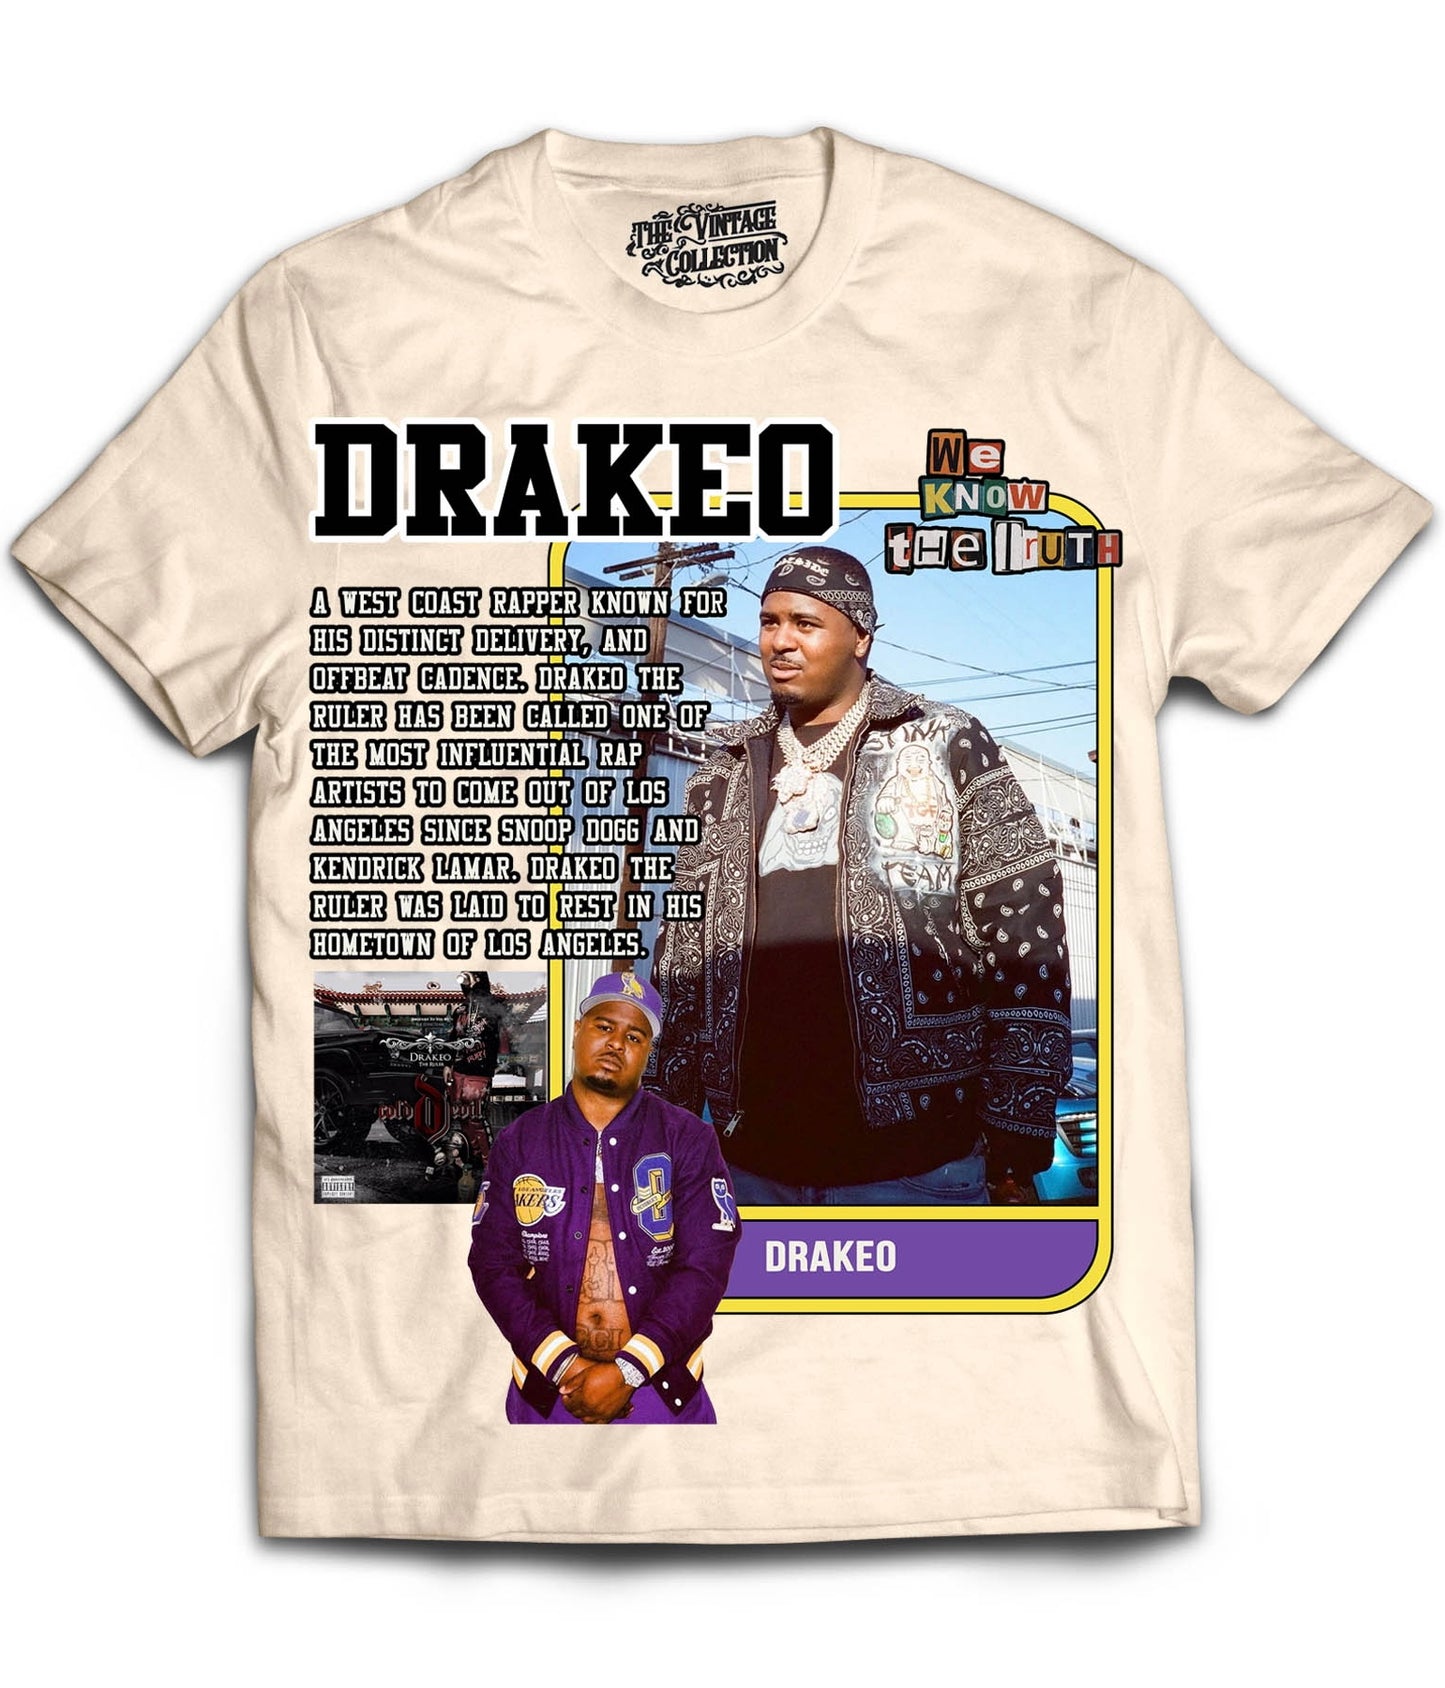 Drakeo Card Shirt (Cream)